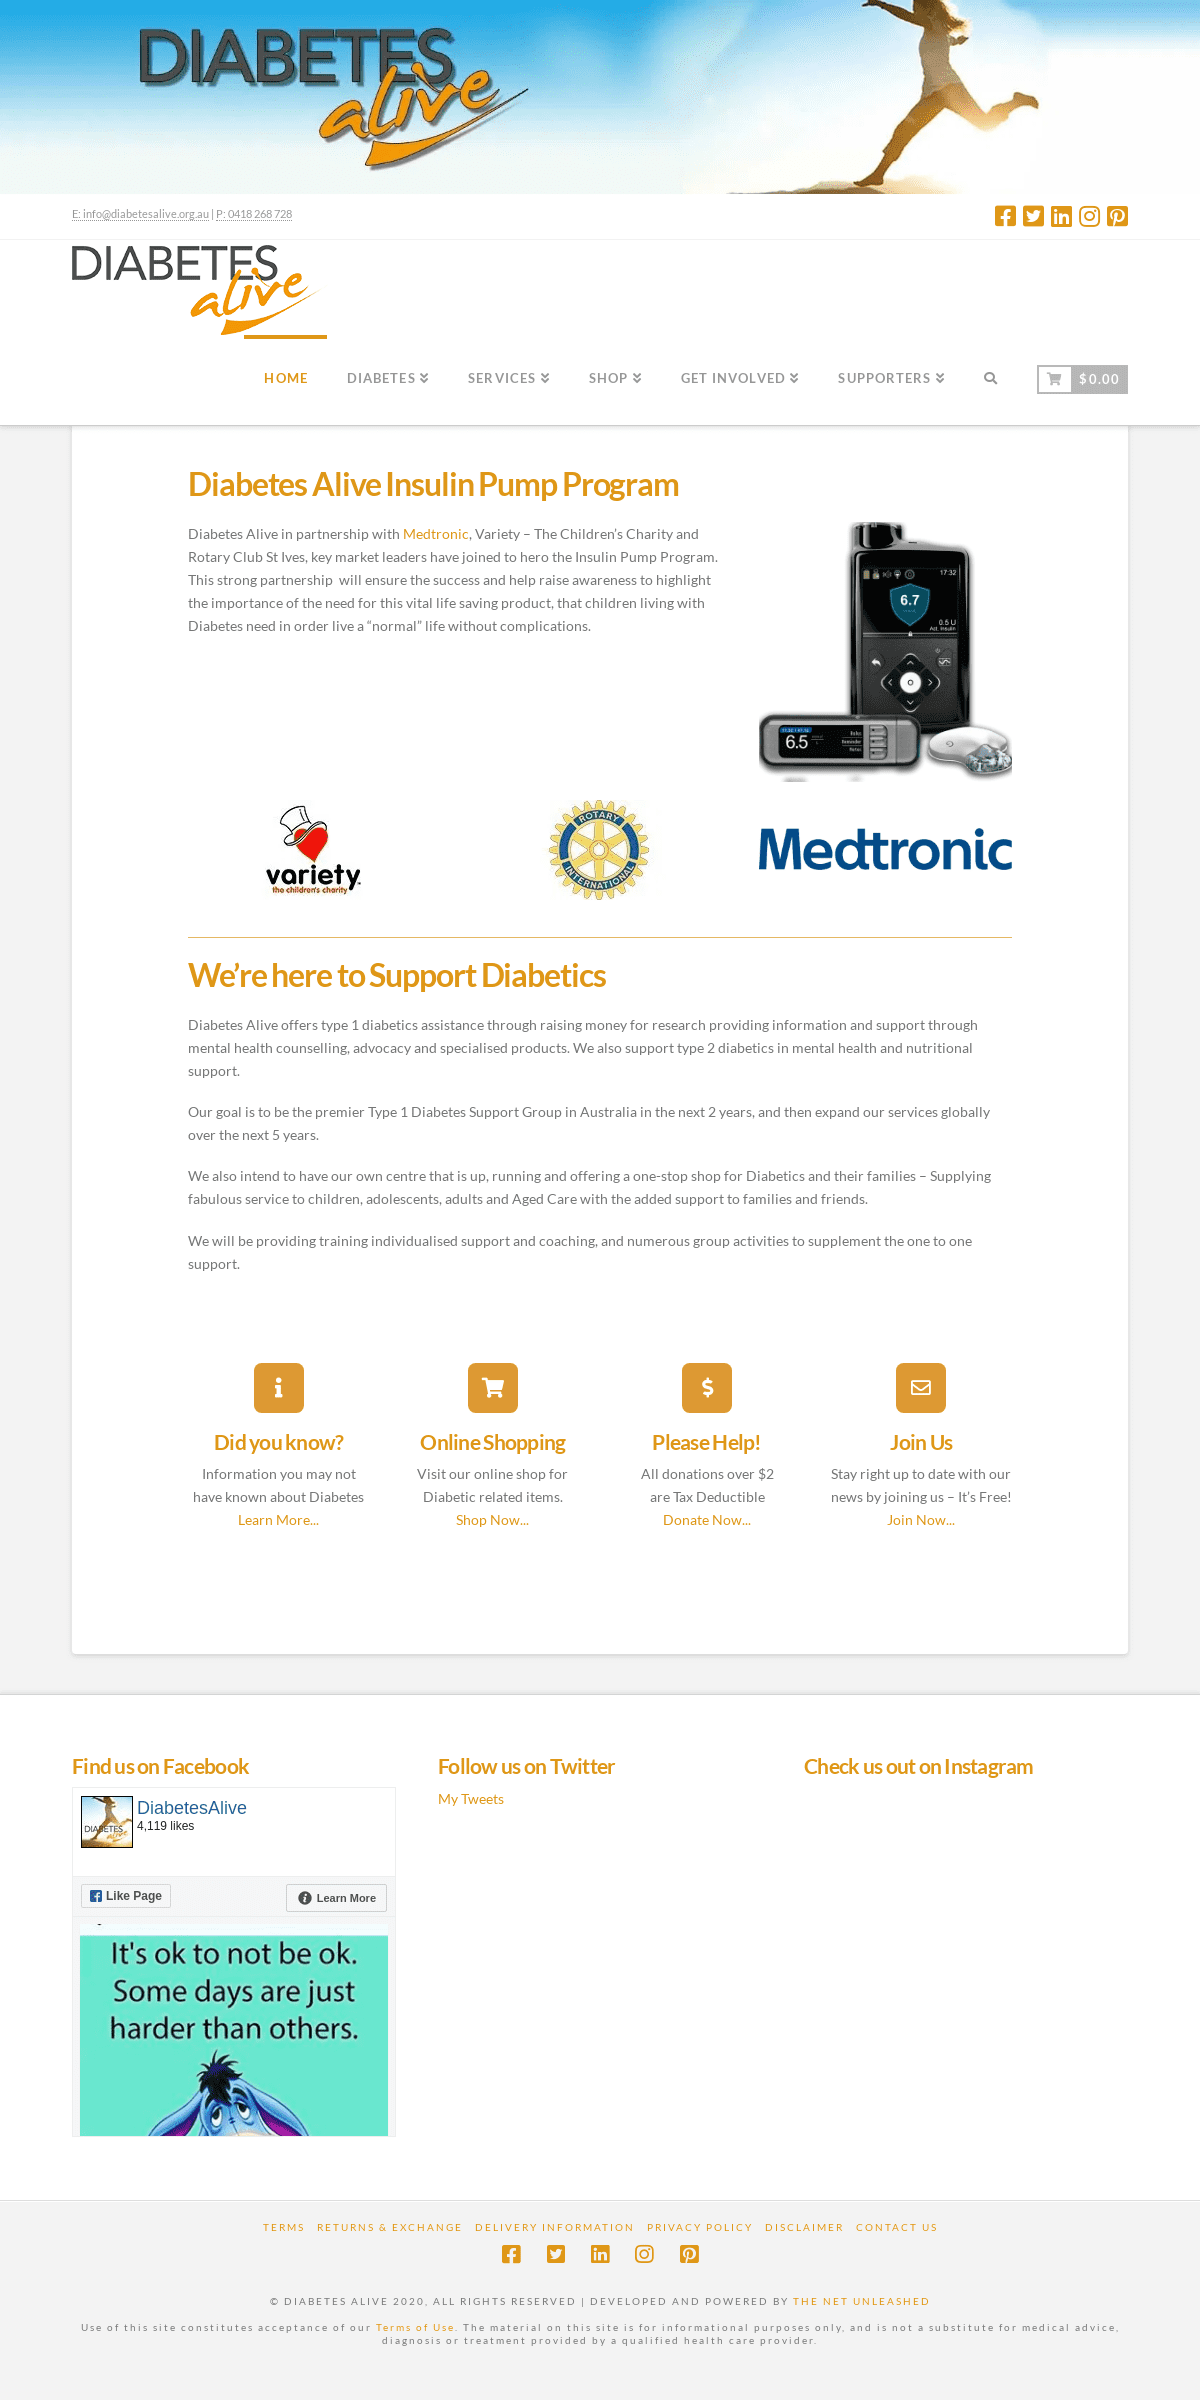 A complete backup of diabetesalive.org.au